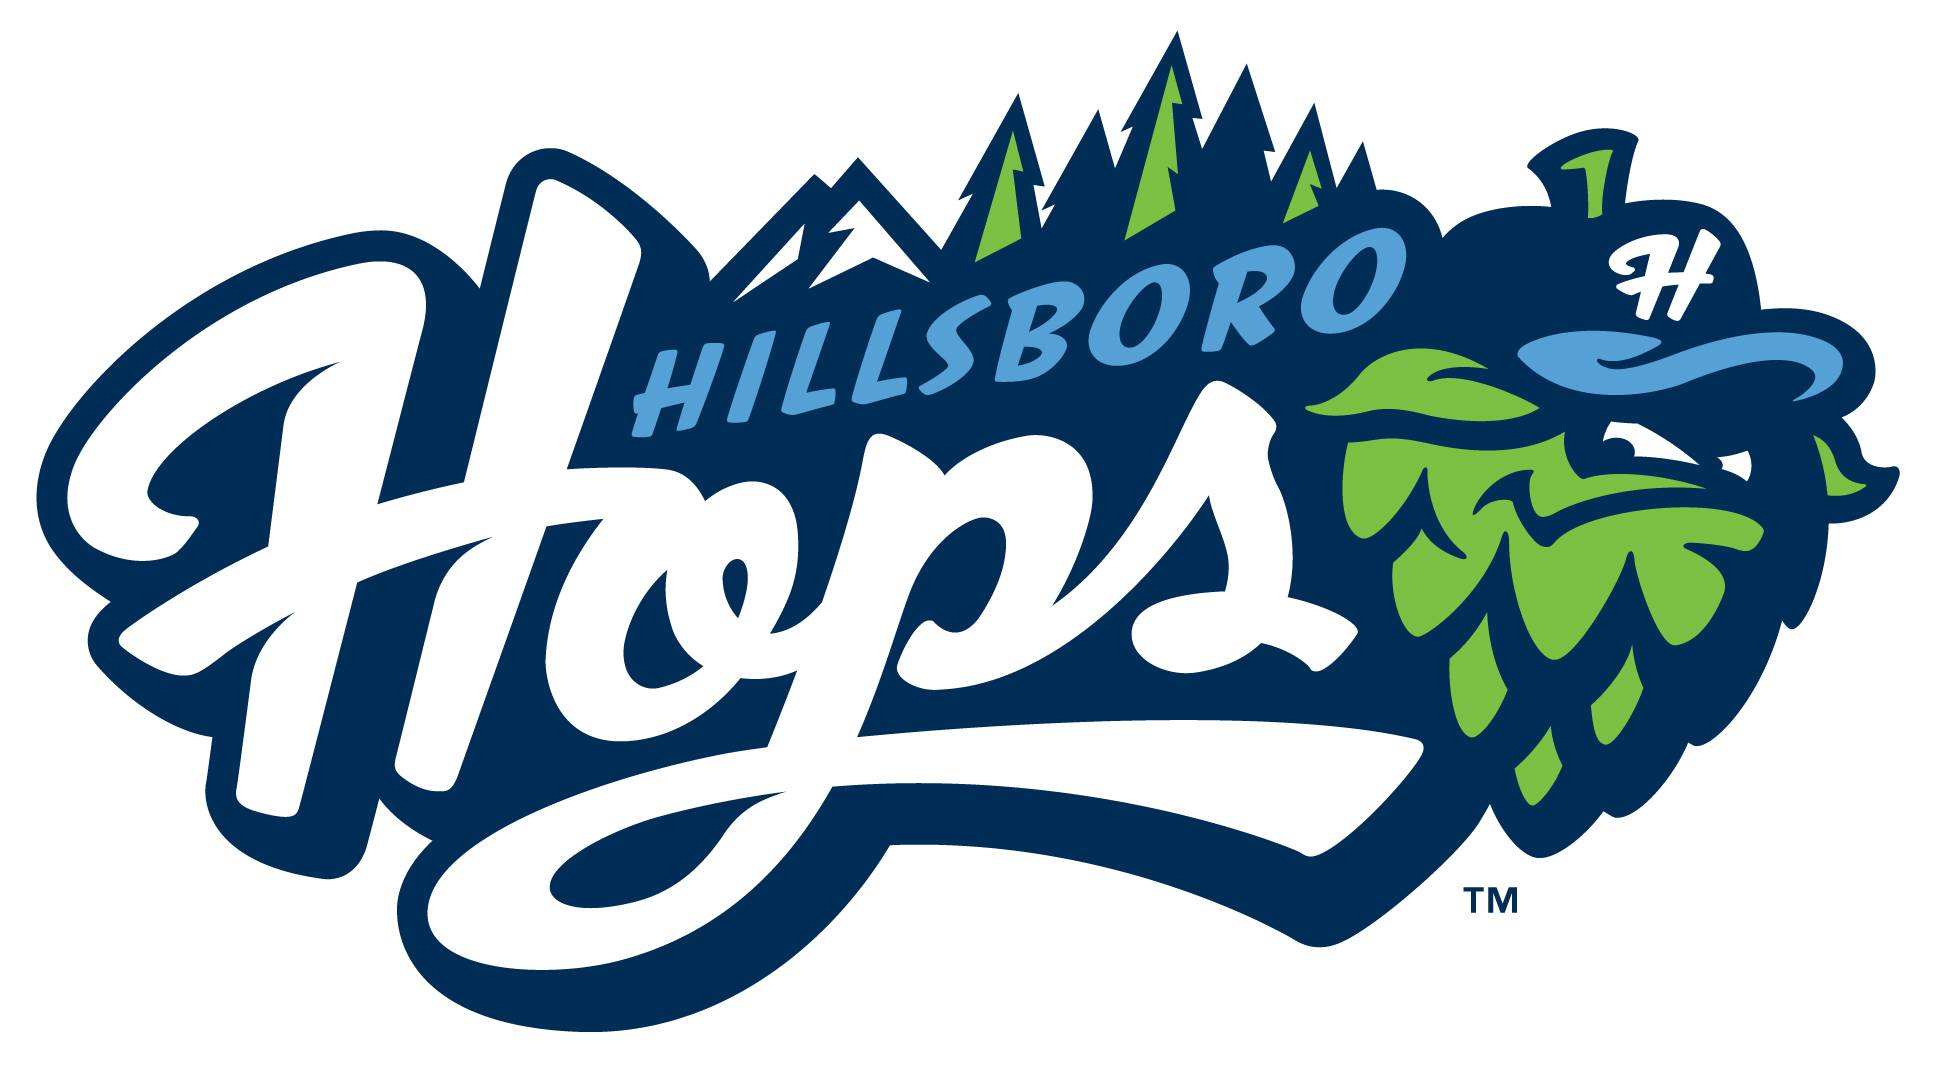 The Hillsboro Hops Class A baseball team will begin play this summer.